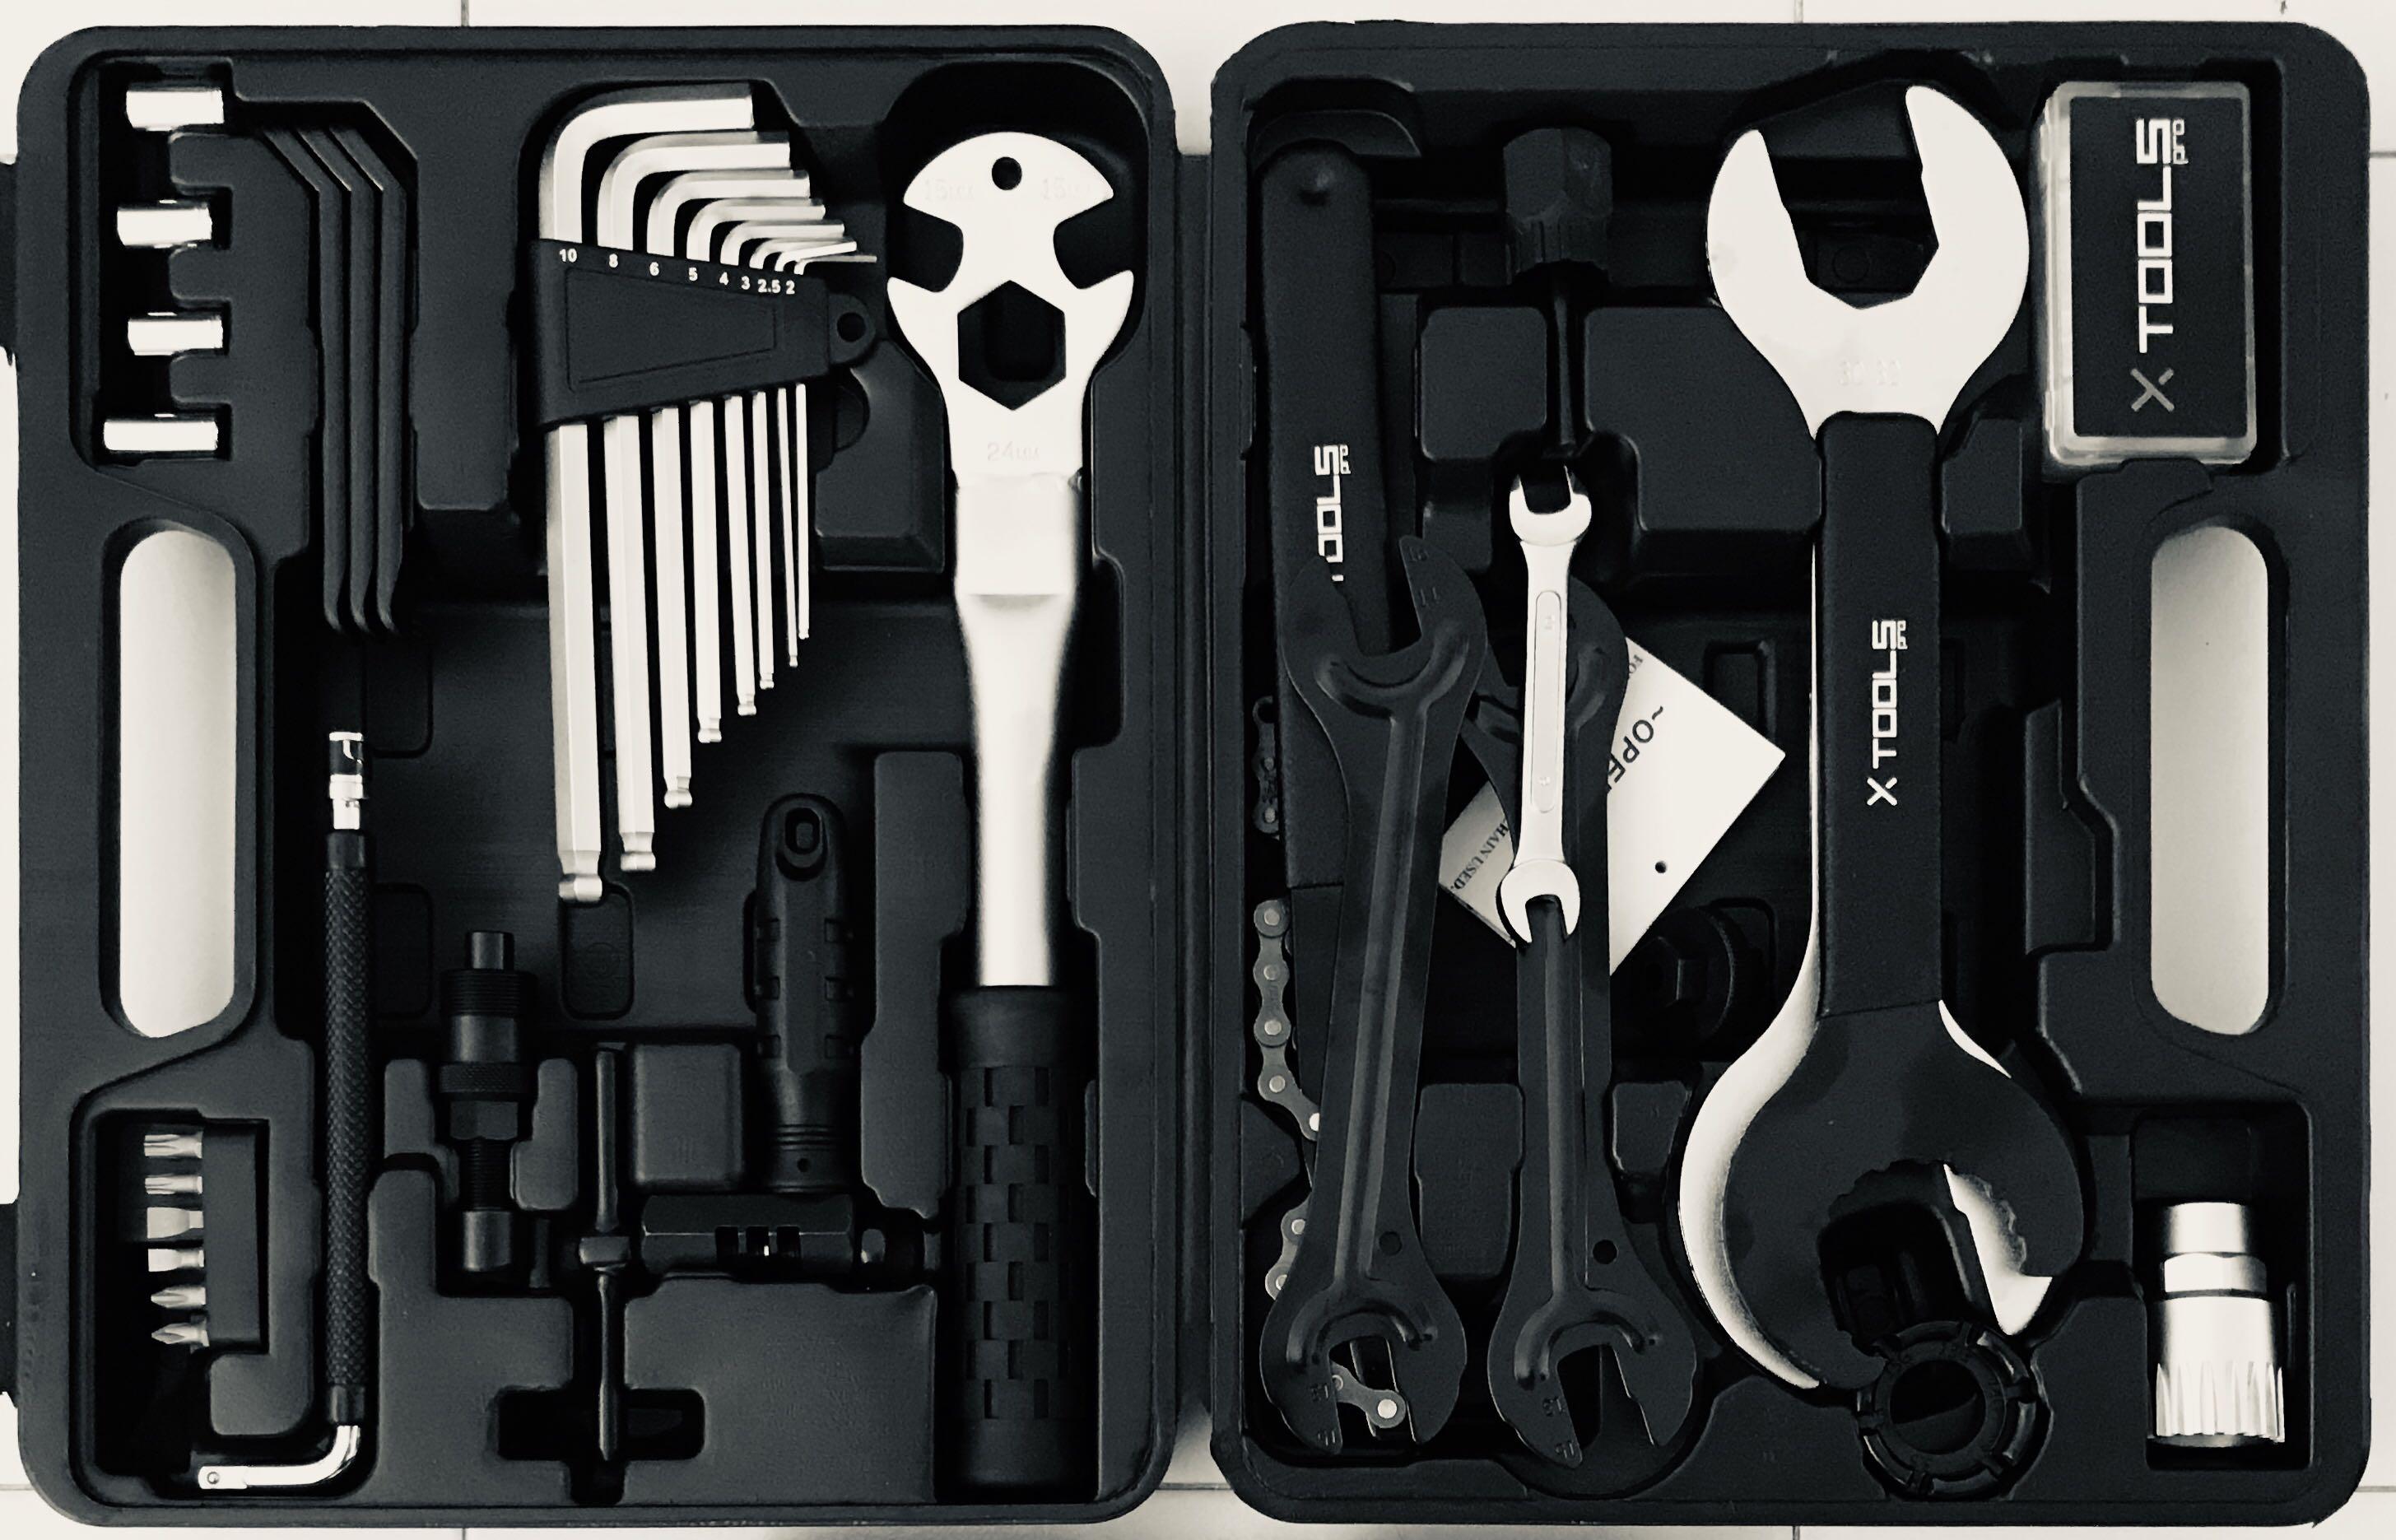 x tools bike kit